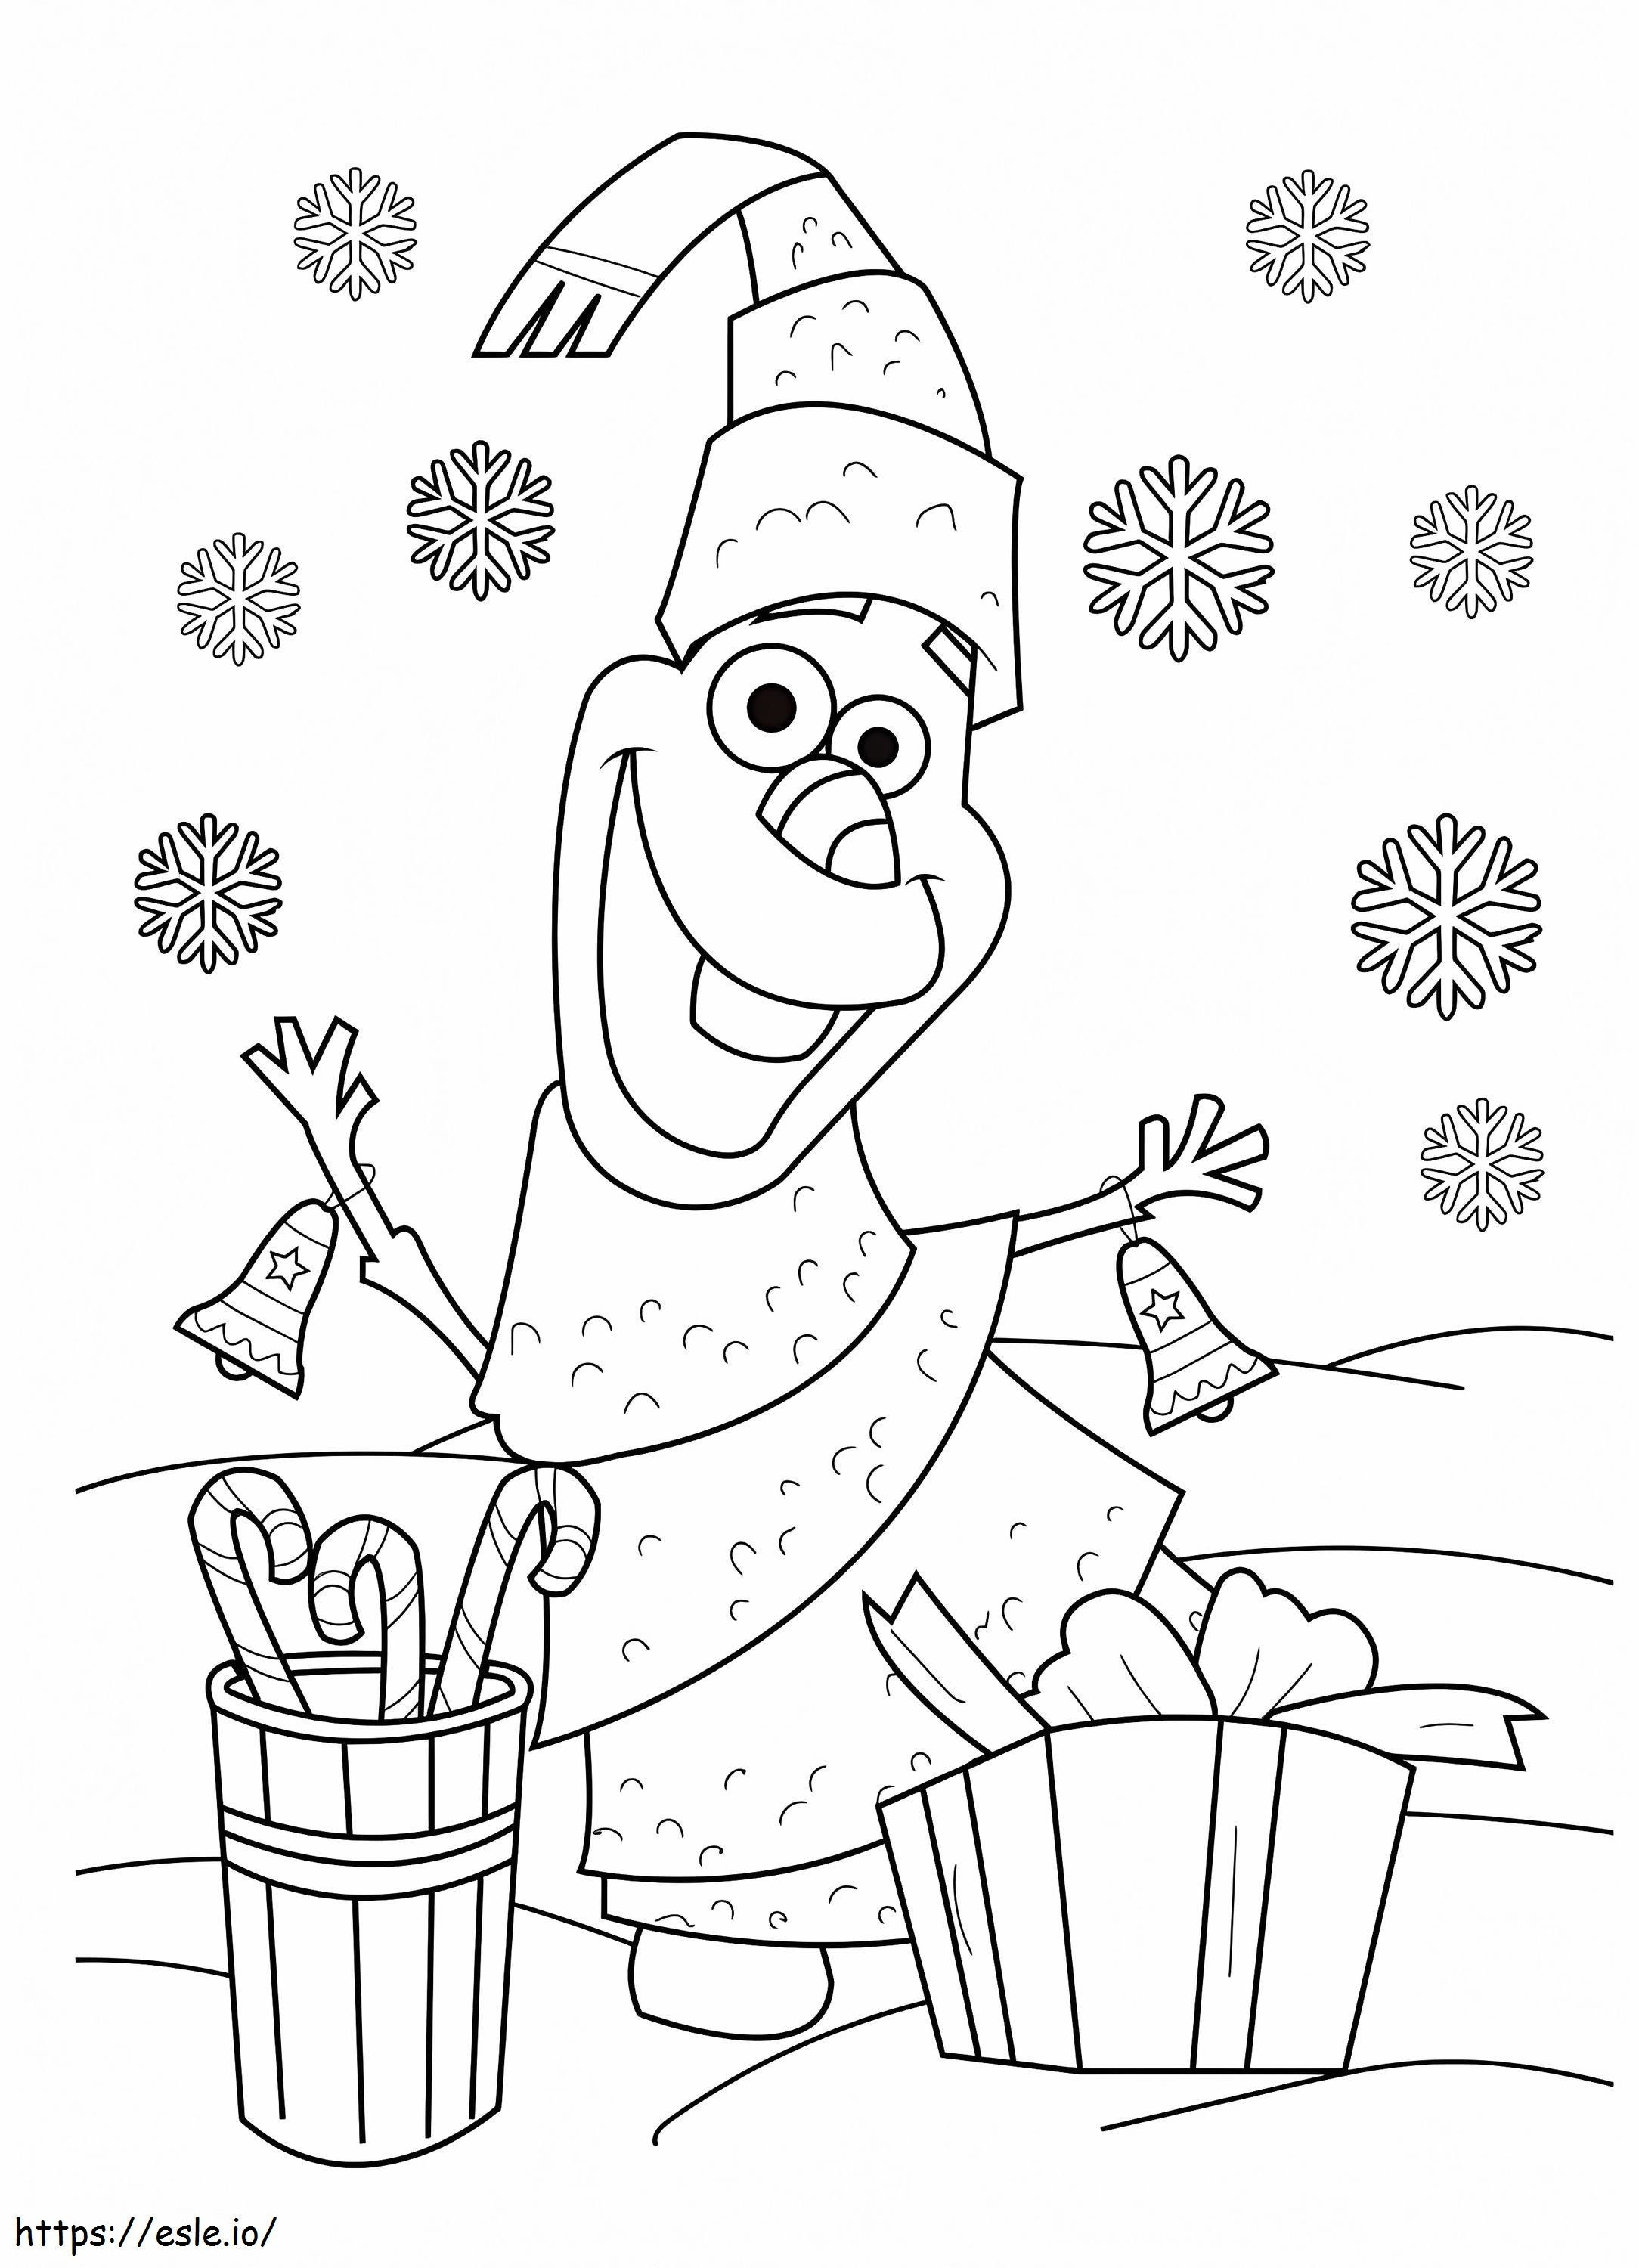 Olaf Disney Christmas coloring page